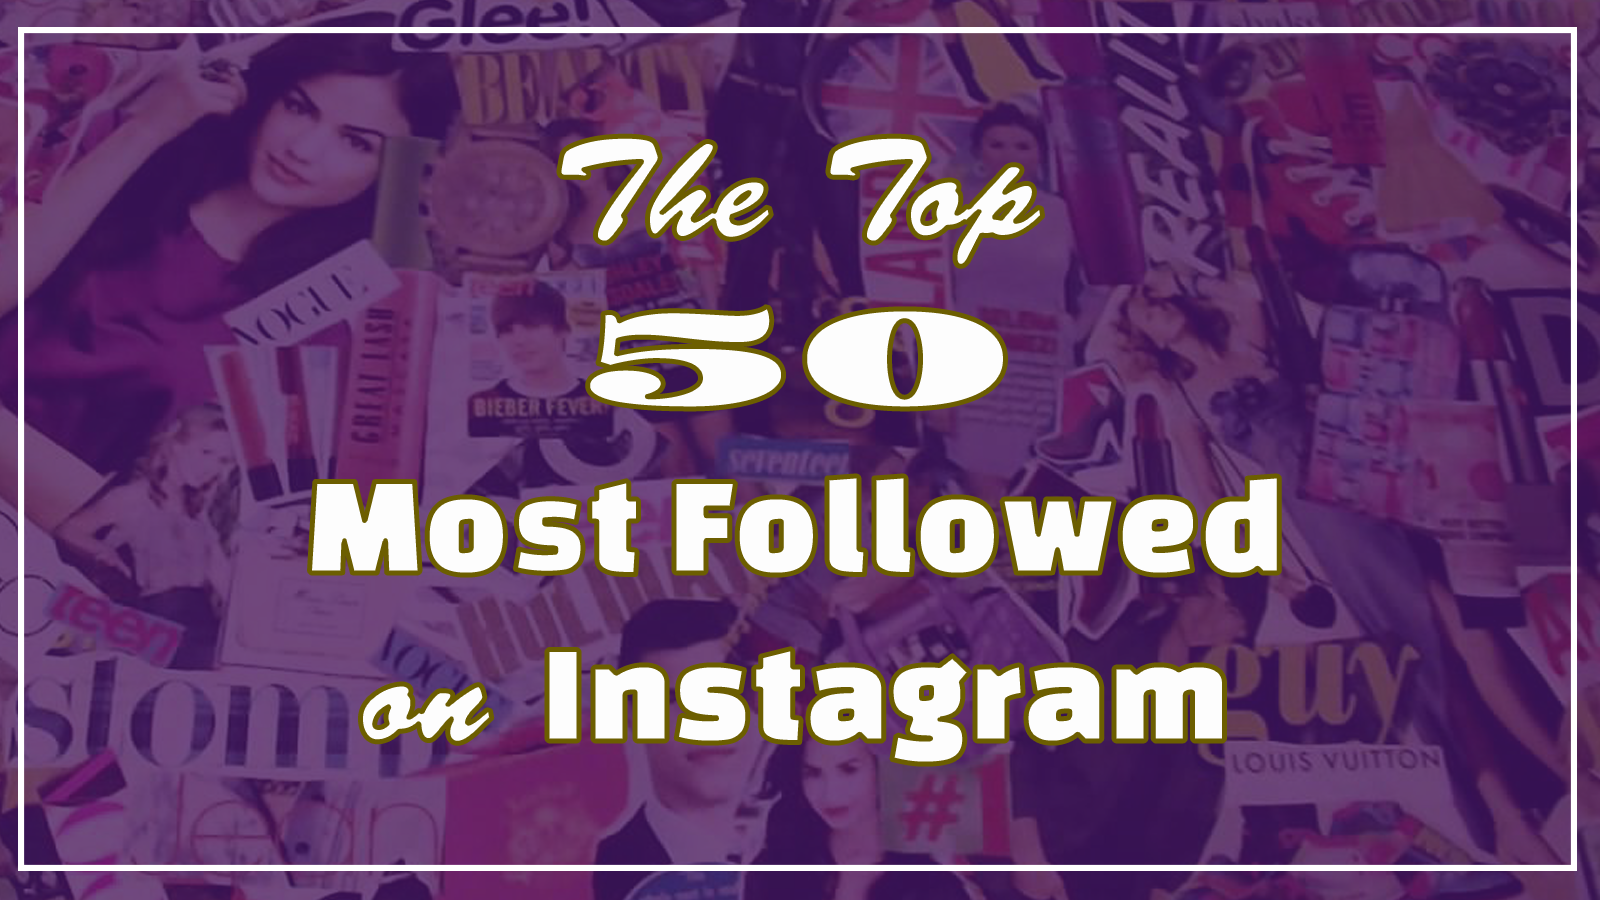 Live] Top50 Instagram Follower Count - Instagram, Cristiano Ronaldo, Leo  Messi & More 